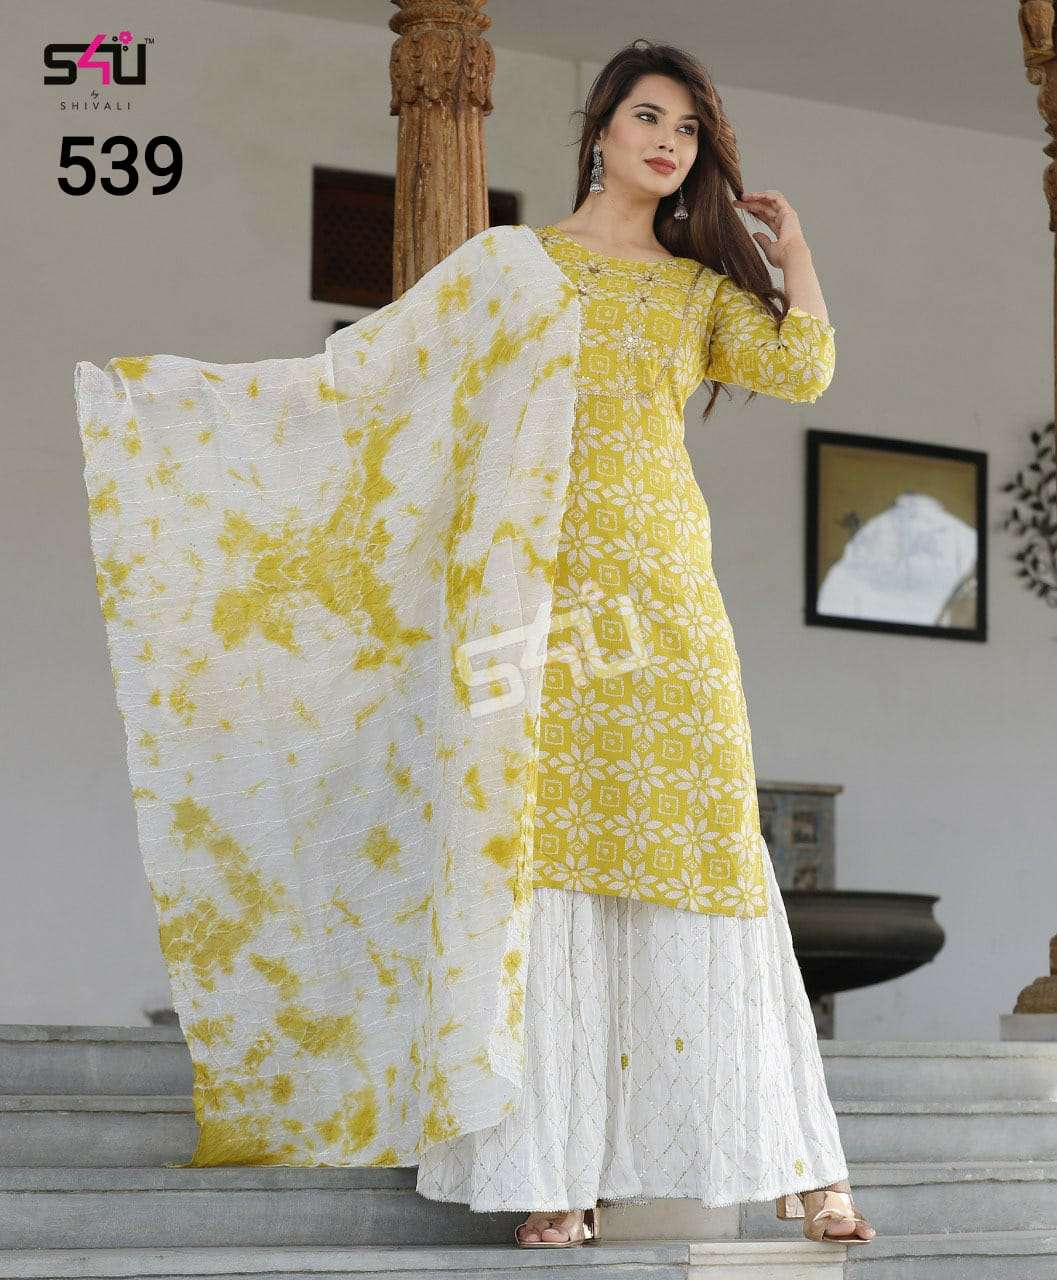 S4u 539 Fancy Readymade Salwar Kameez collection